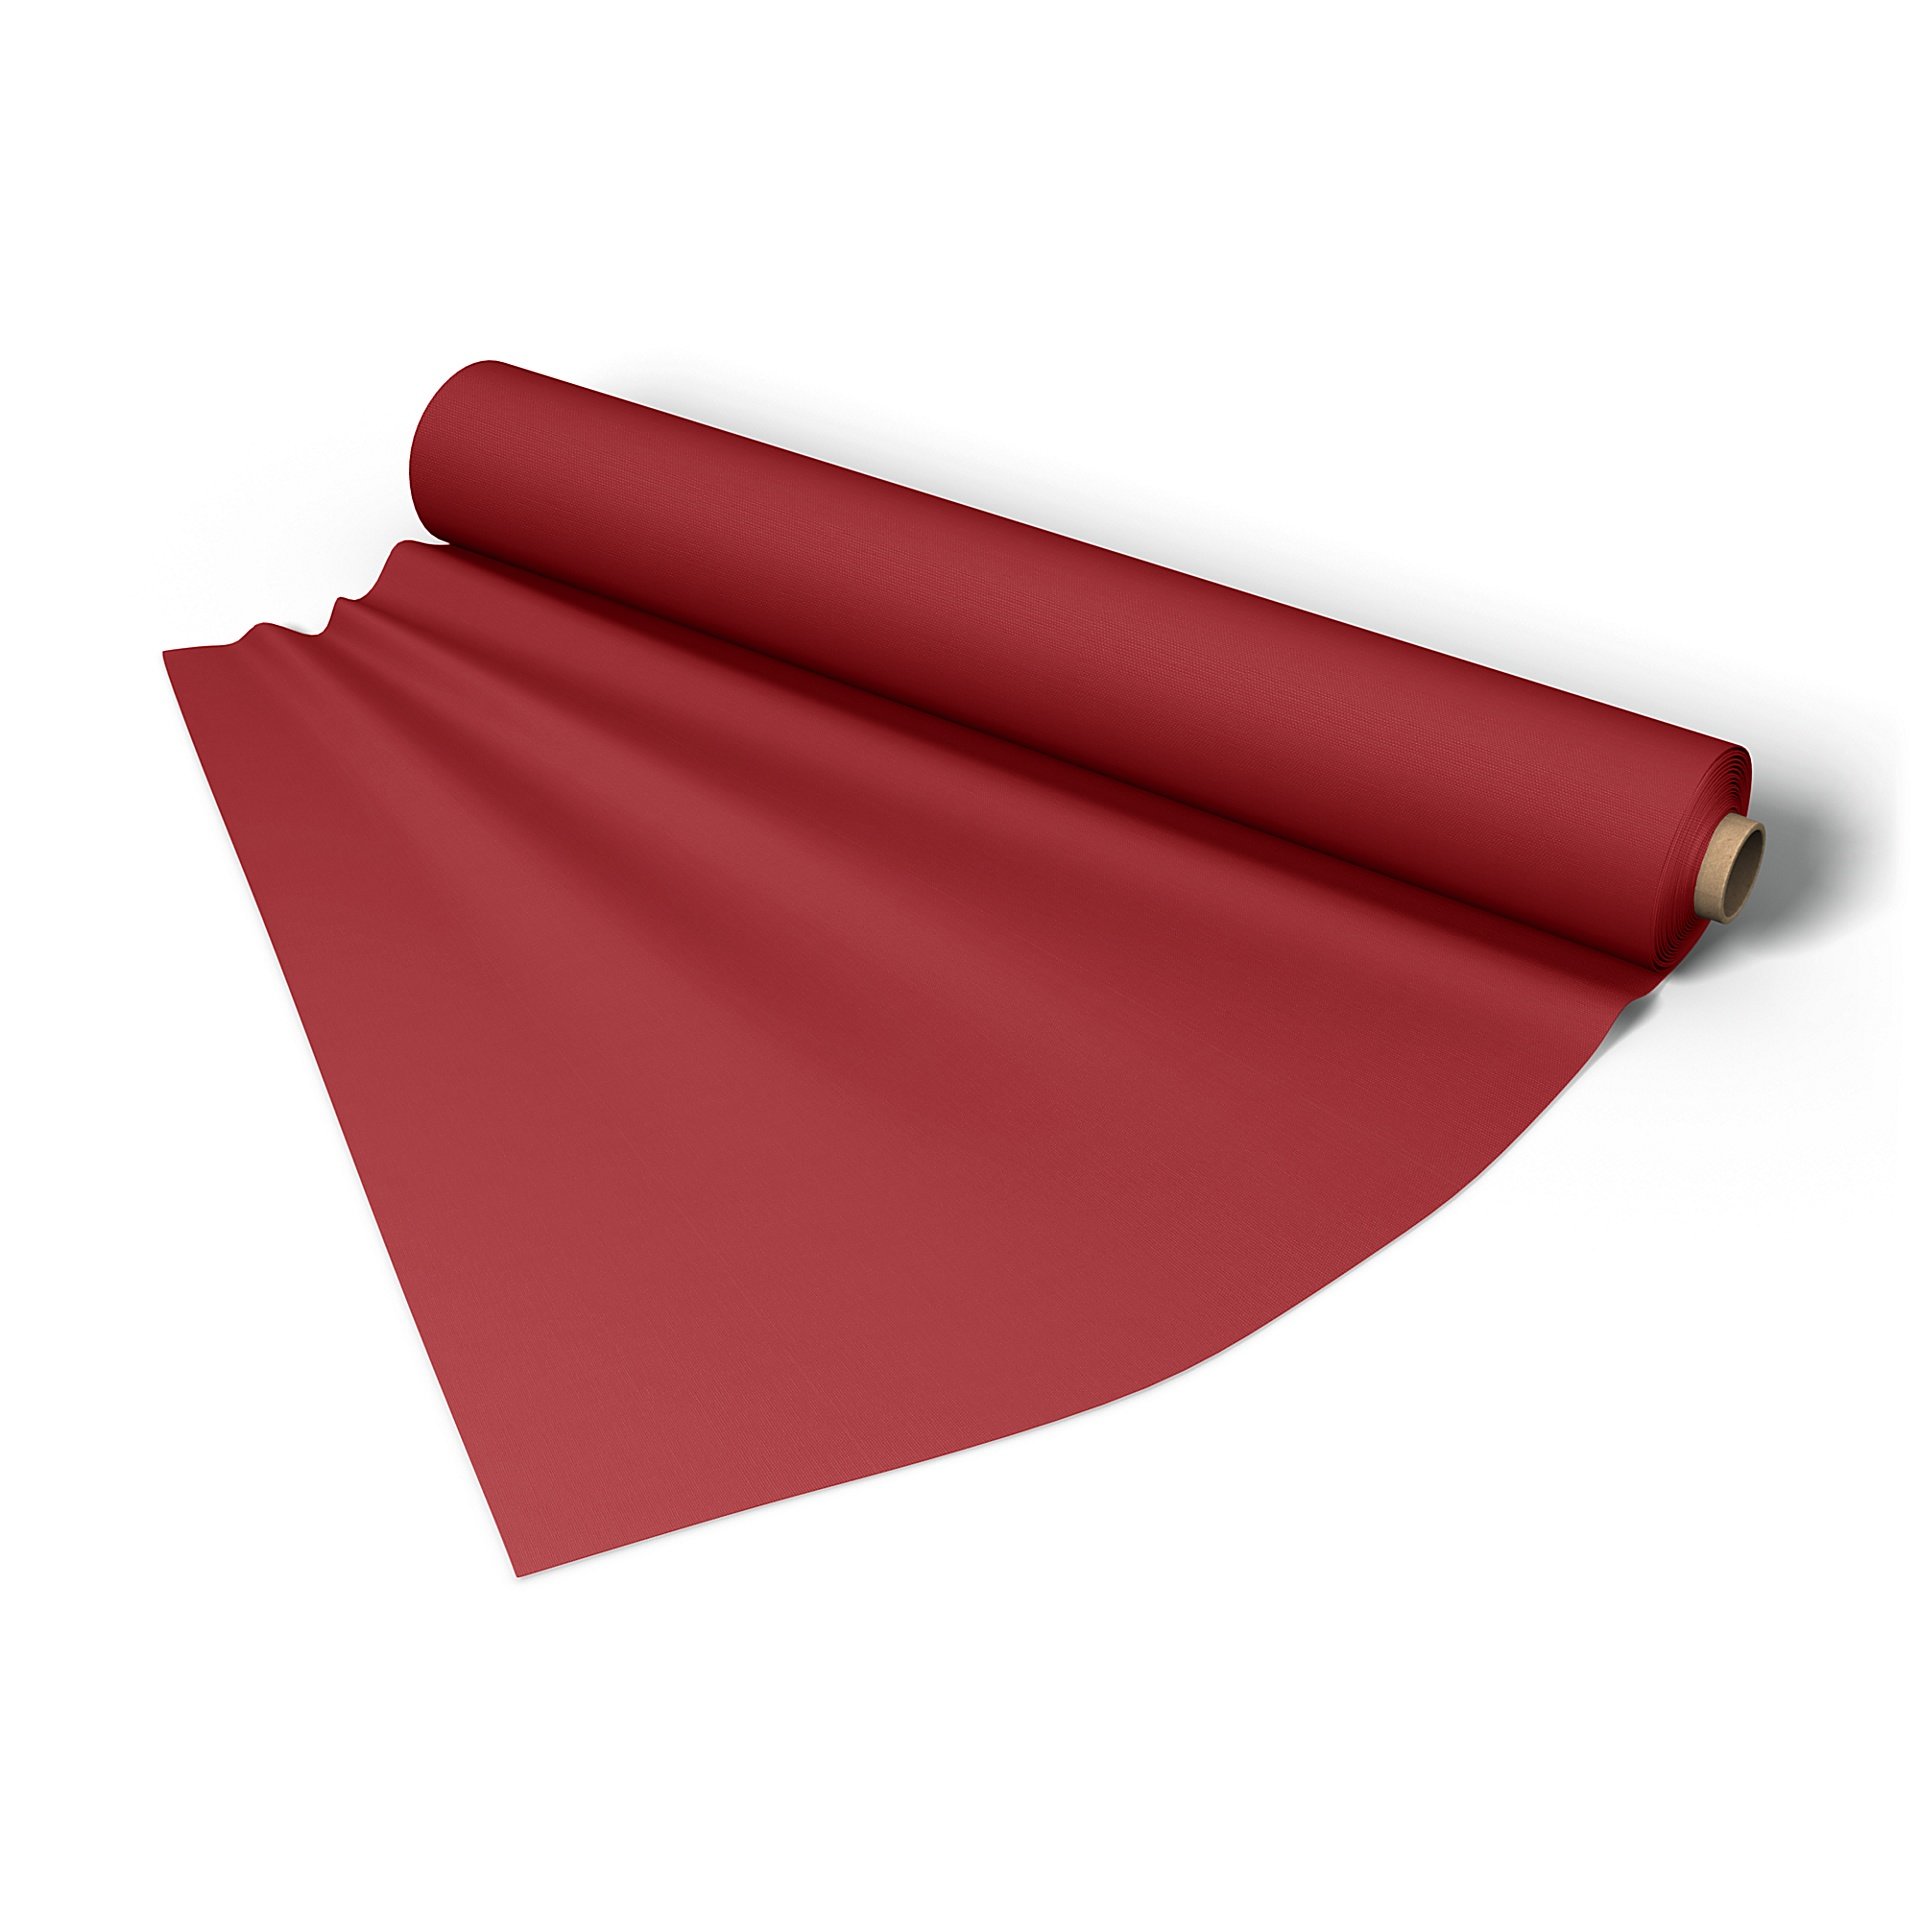 Fabric per metre, Scarlet Red, Cotton - Bemz